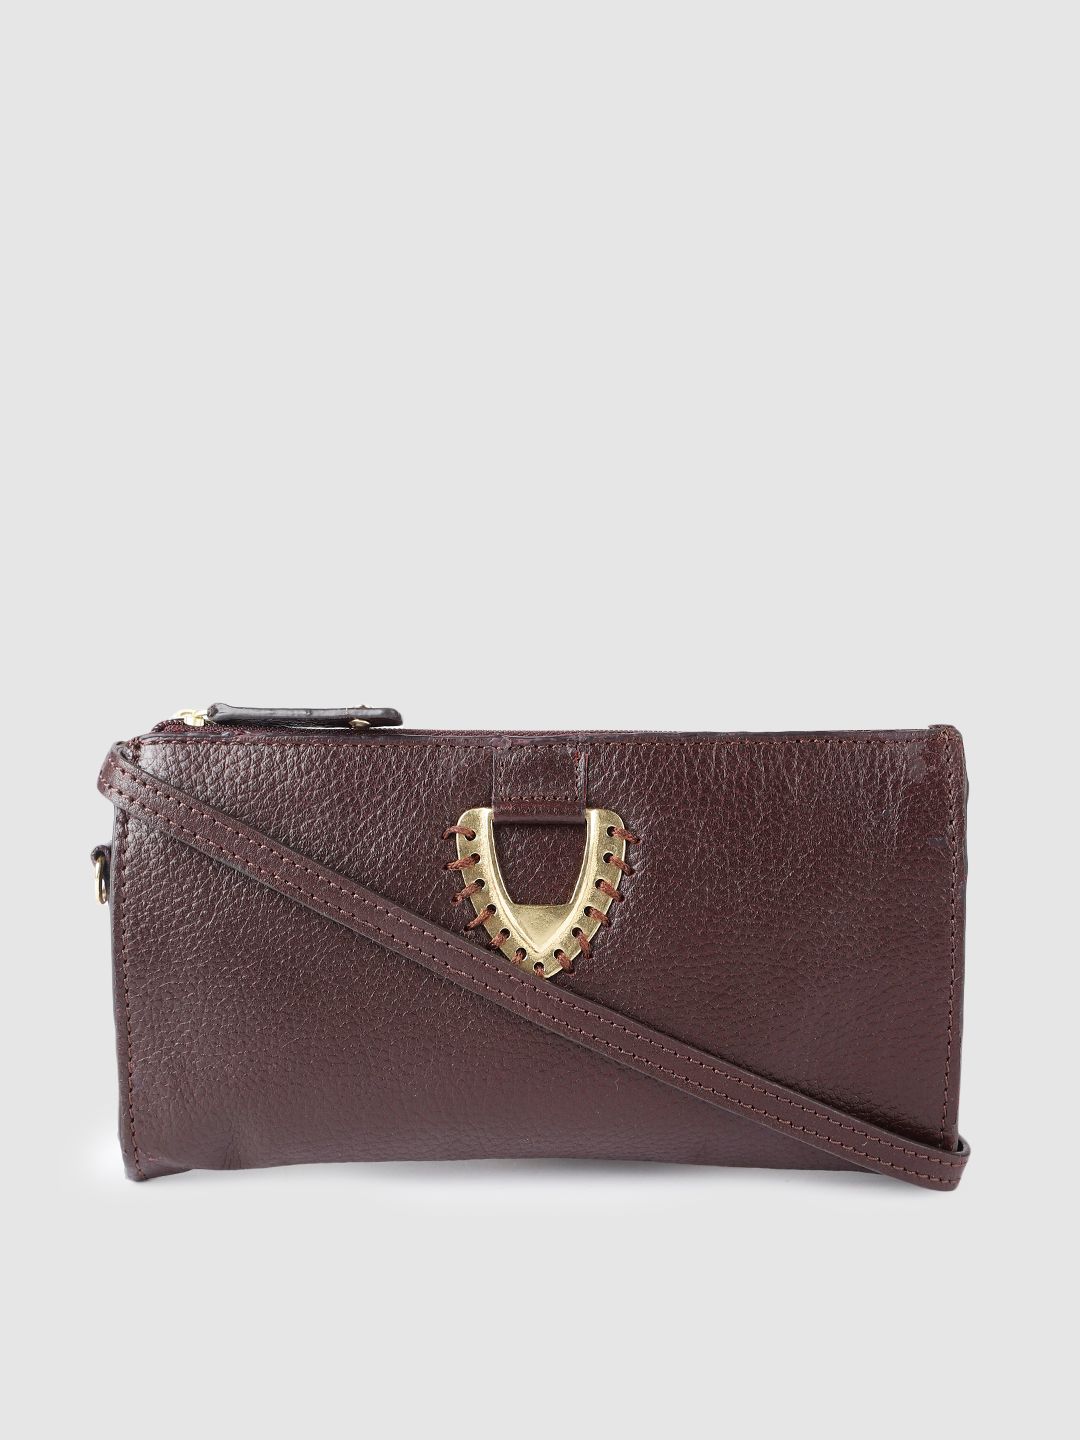 Hidesign Women Brown Leather Zip Around Wallet Price in India